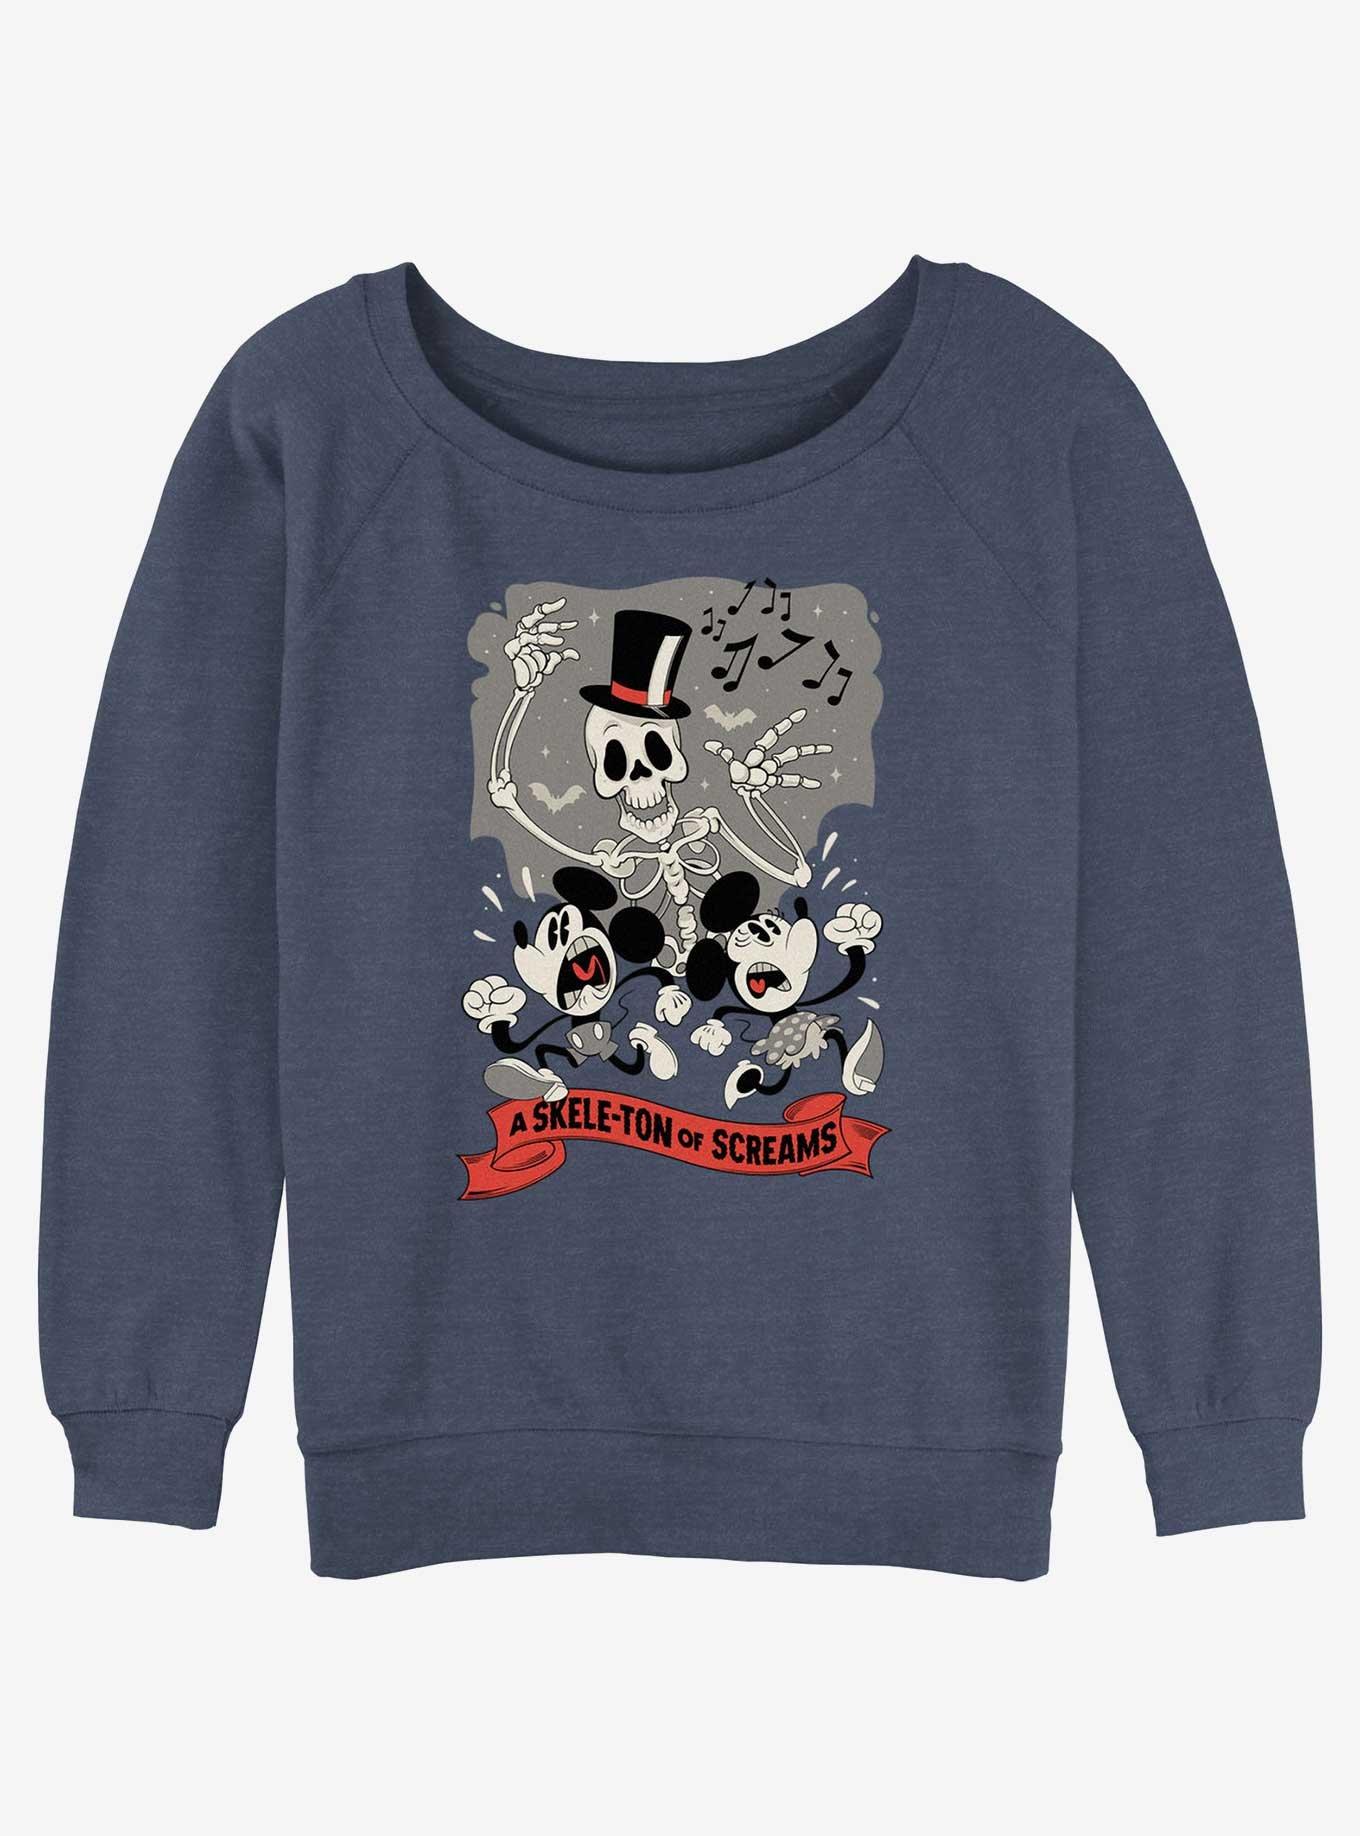 Disney Mickey Mouse A Skele-Ton of Screams Girls Slouchy Sweatshirt, BLUEHTR, hi-res